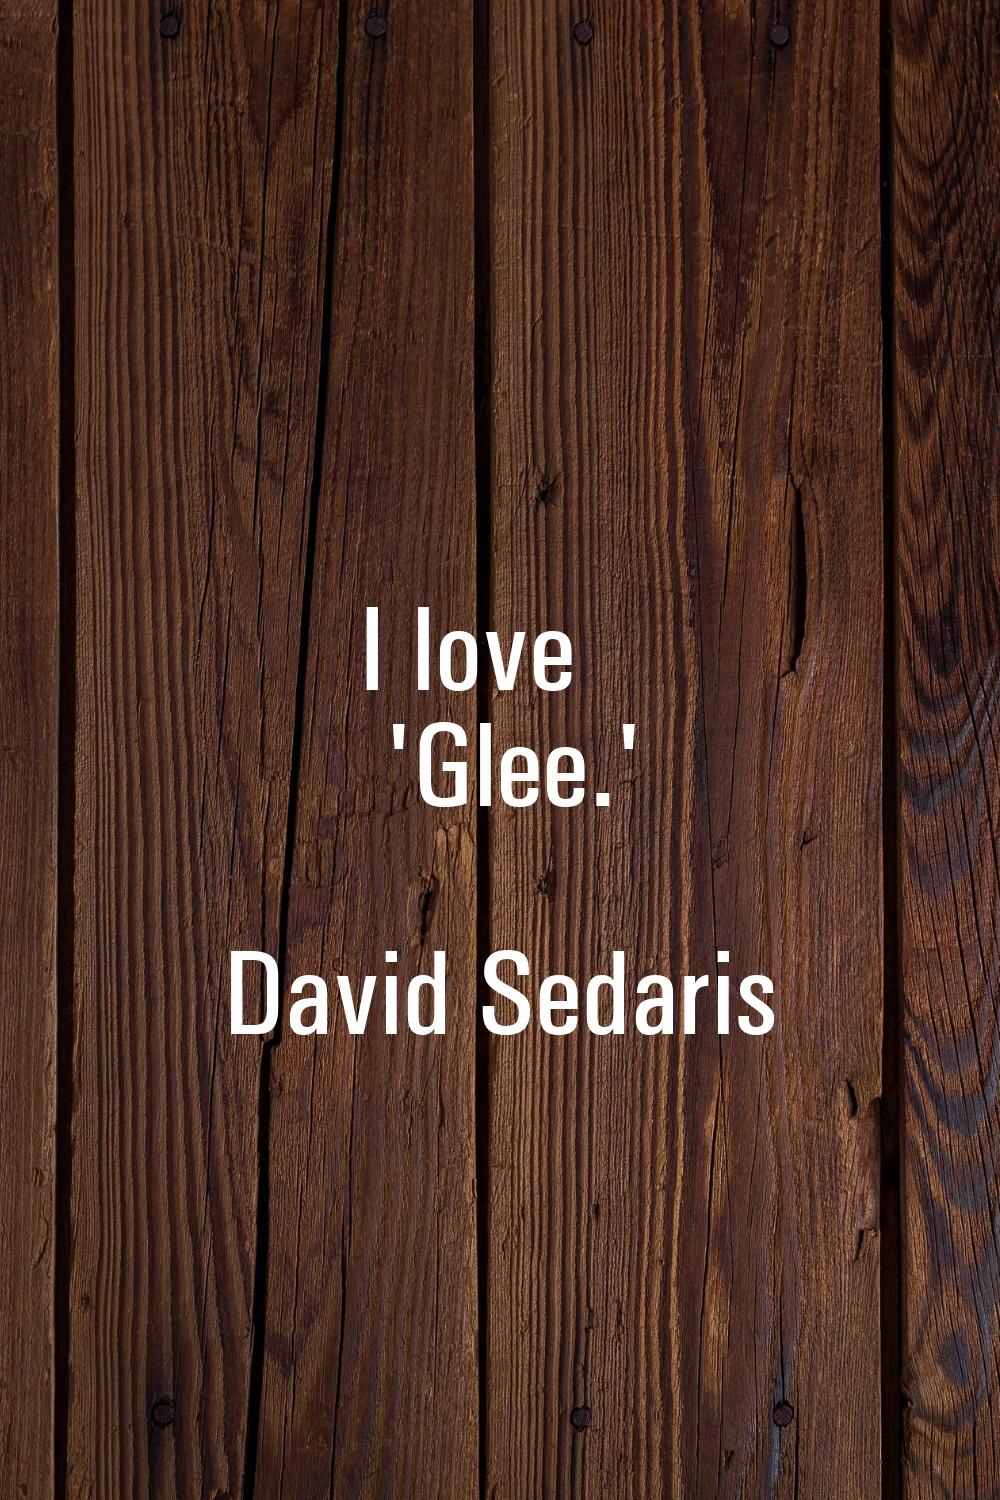 I love 'Glee.'